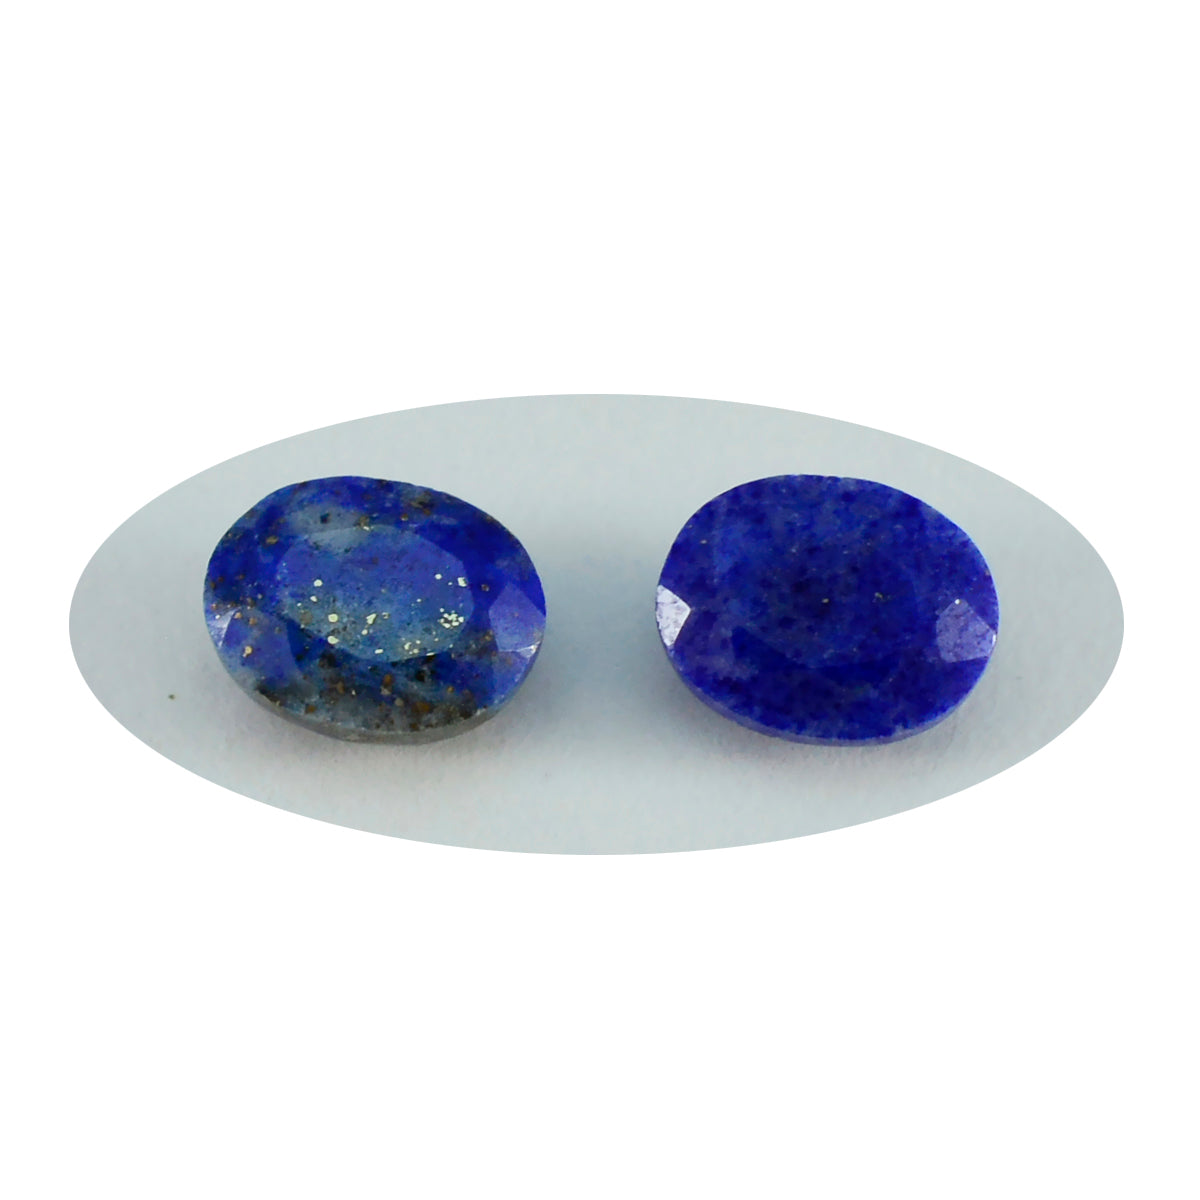 riyogems 1st äkta blå lapis lazuli facetterad 4x6 mm oval form vacker kvalitetspärla